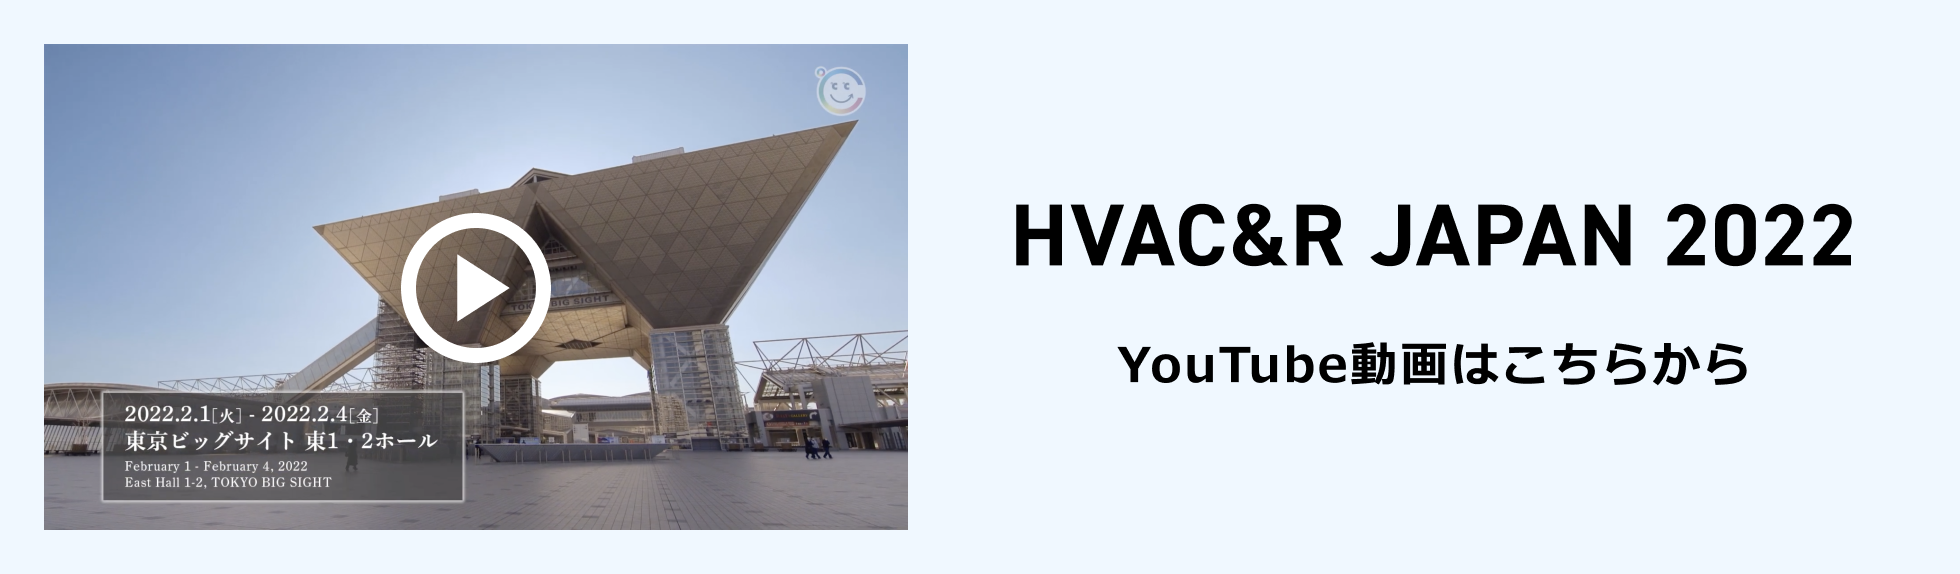 HVAC&R JAPAN 2022 YouTube動画はこちらから